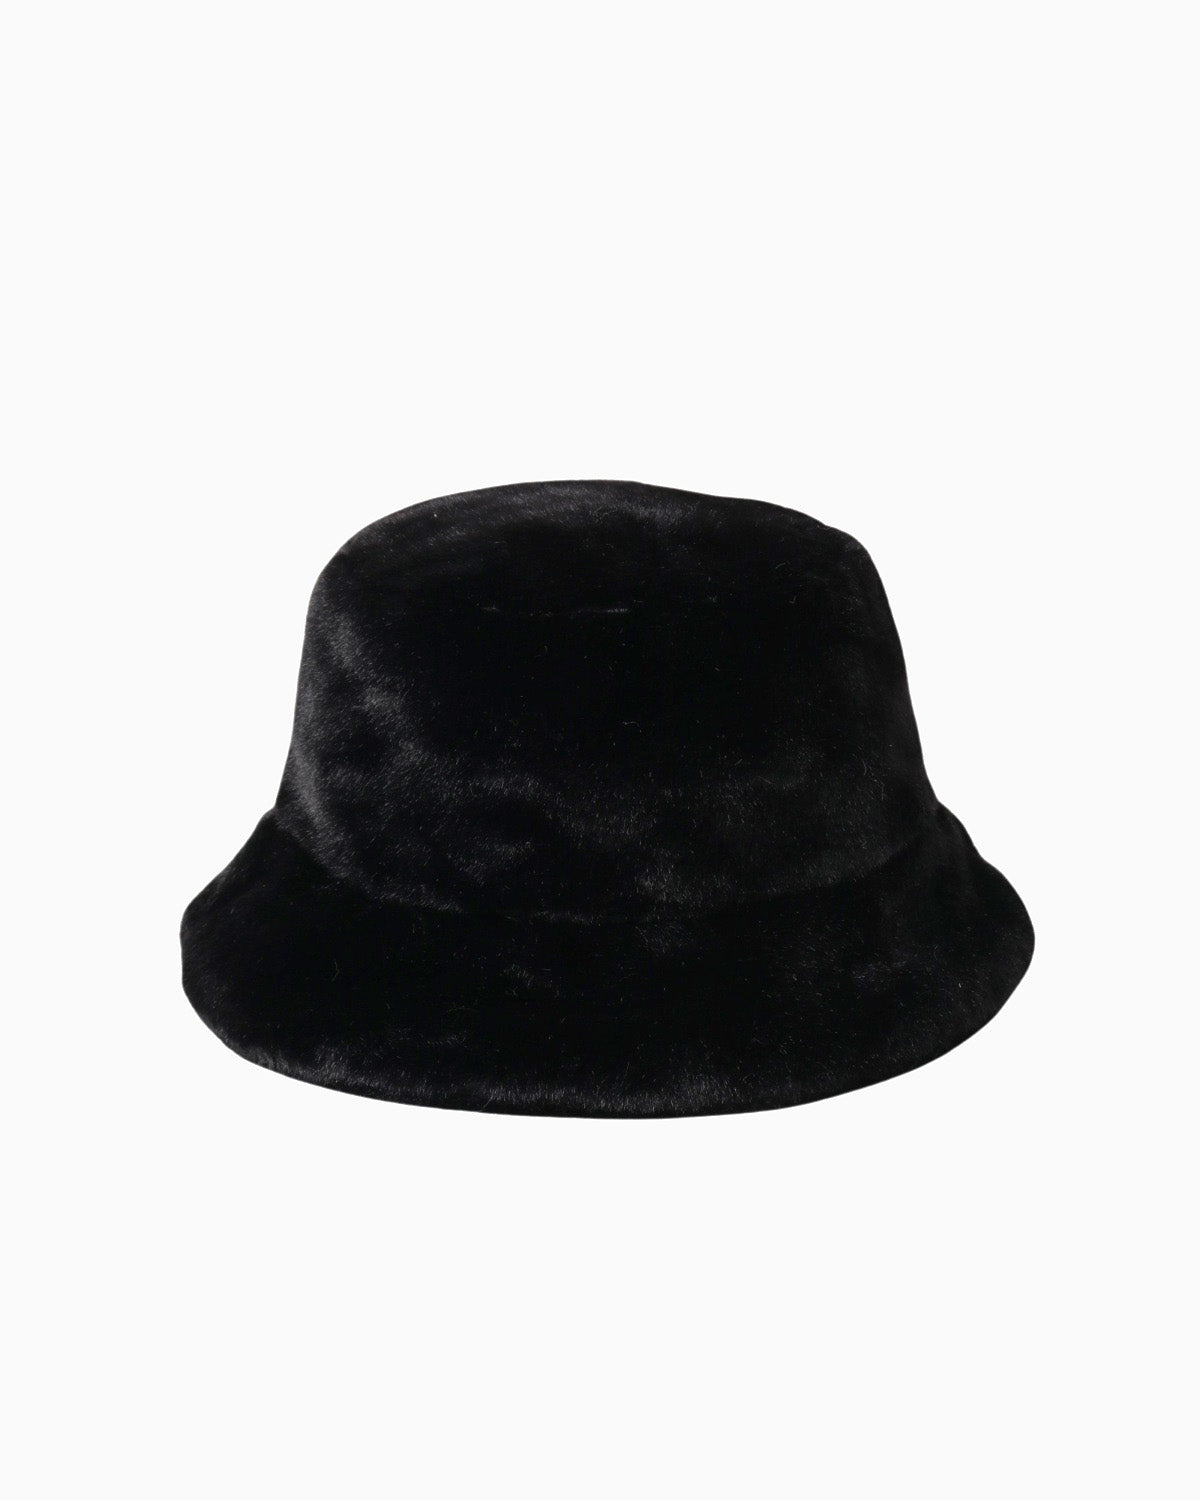 FUR BUCKET HAT (ブラック)– コンバース オンライン ショップ